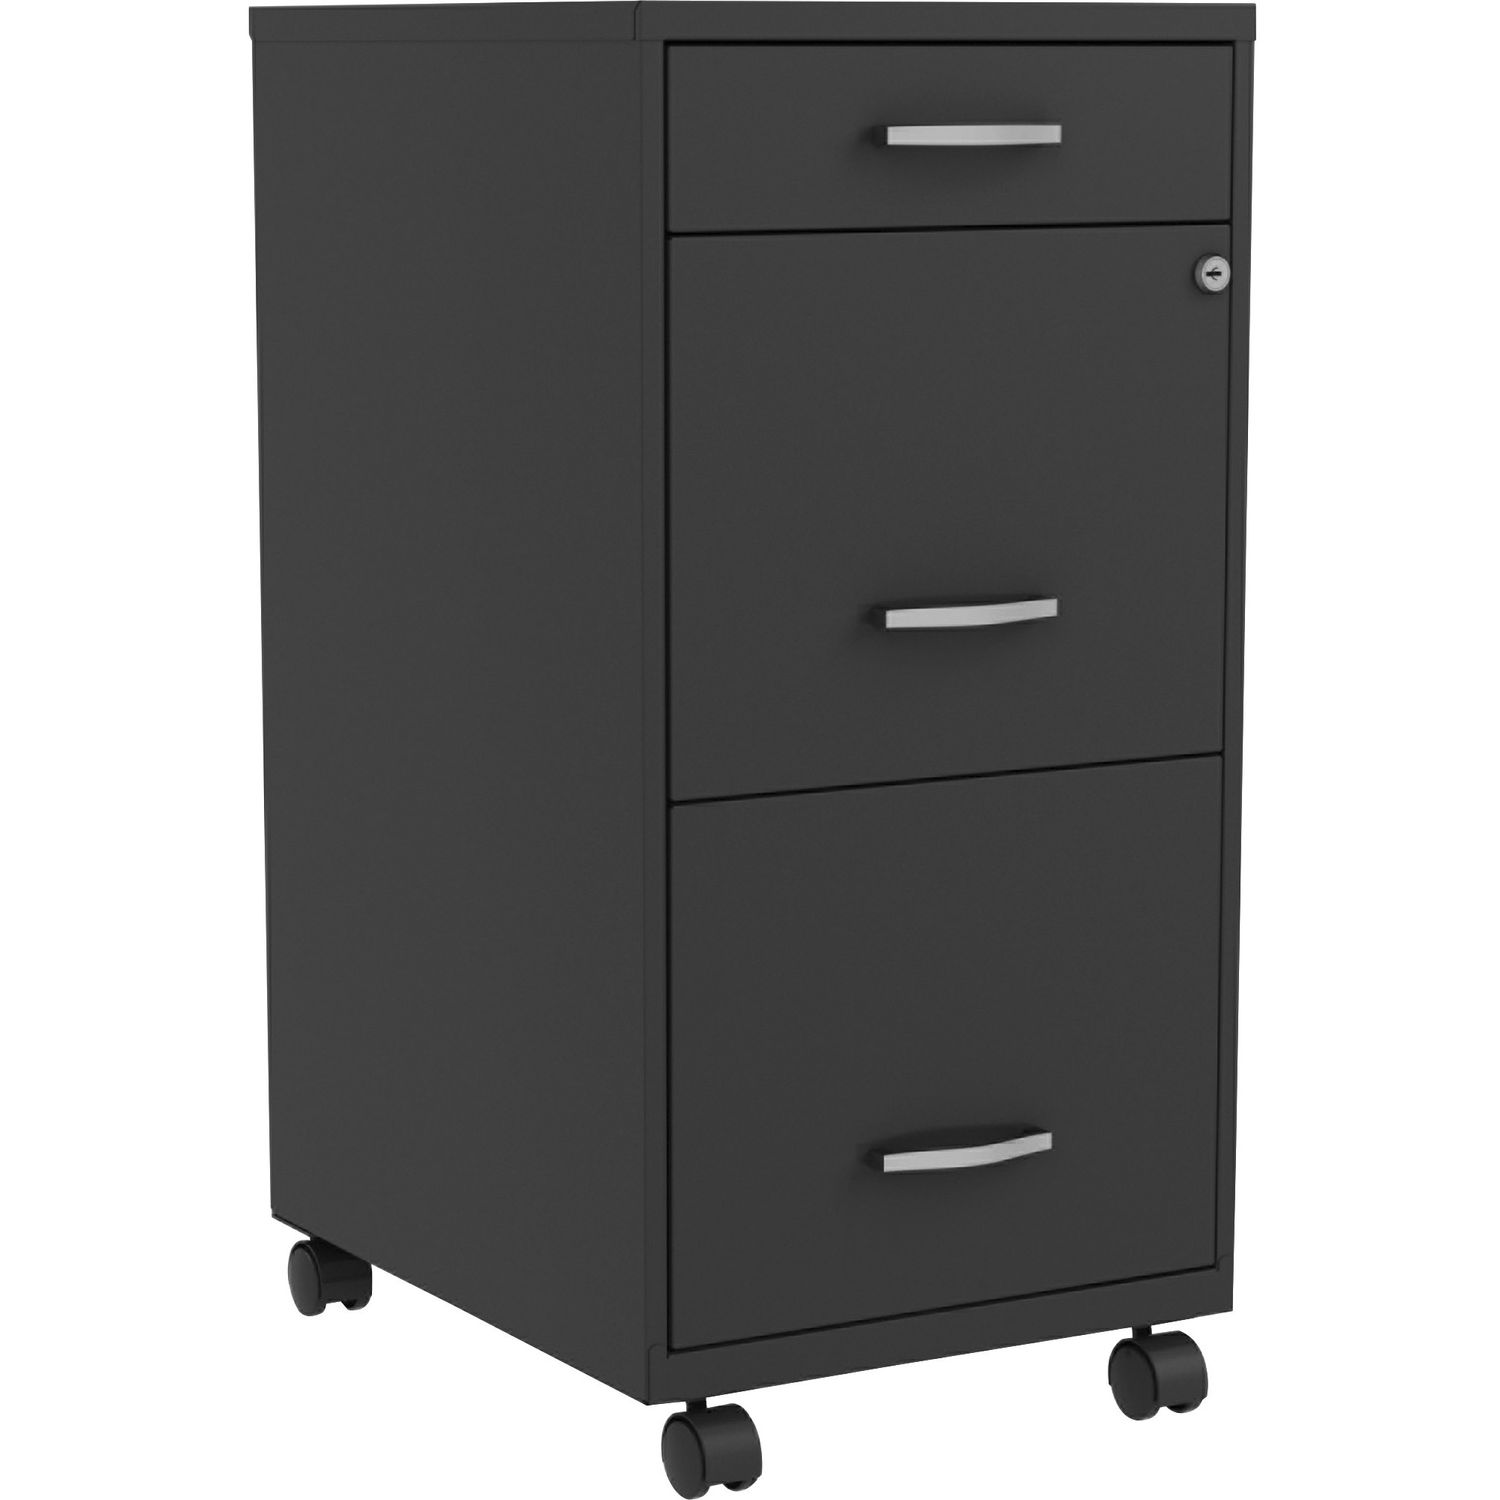 SOHO Box/File/File 3-Drawer Mobile File Cabinet 14.3" x 18" x 26.5", 3 x File Drawer(s), Box Drawer(s), Material: Plastic Handle, Steel Cabinet, Finish: Baked Enamel, Black